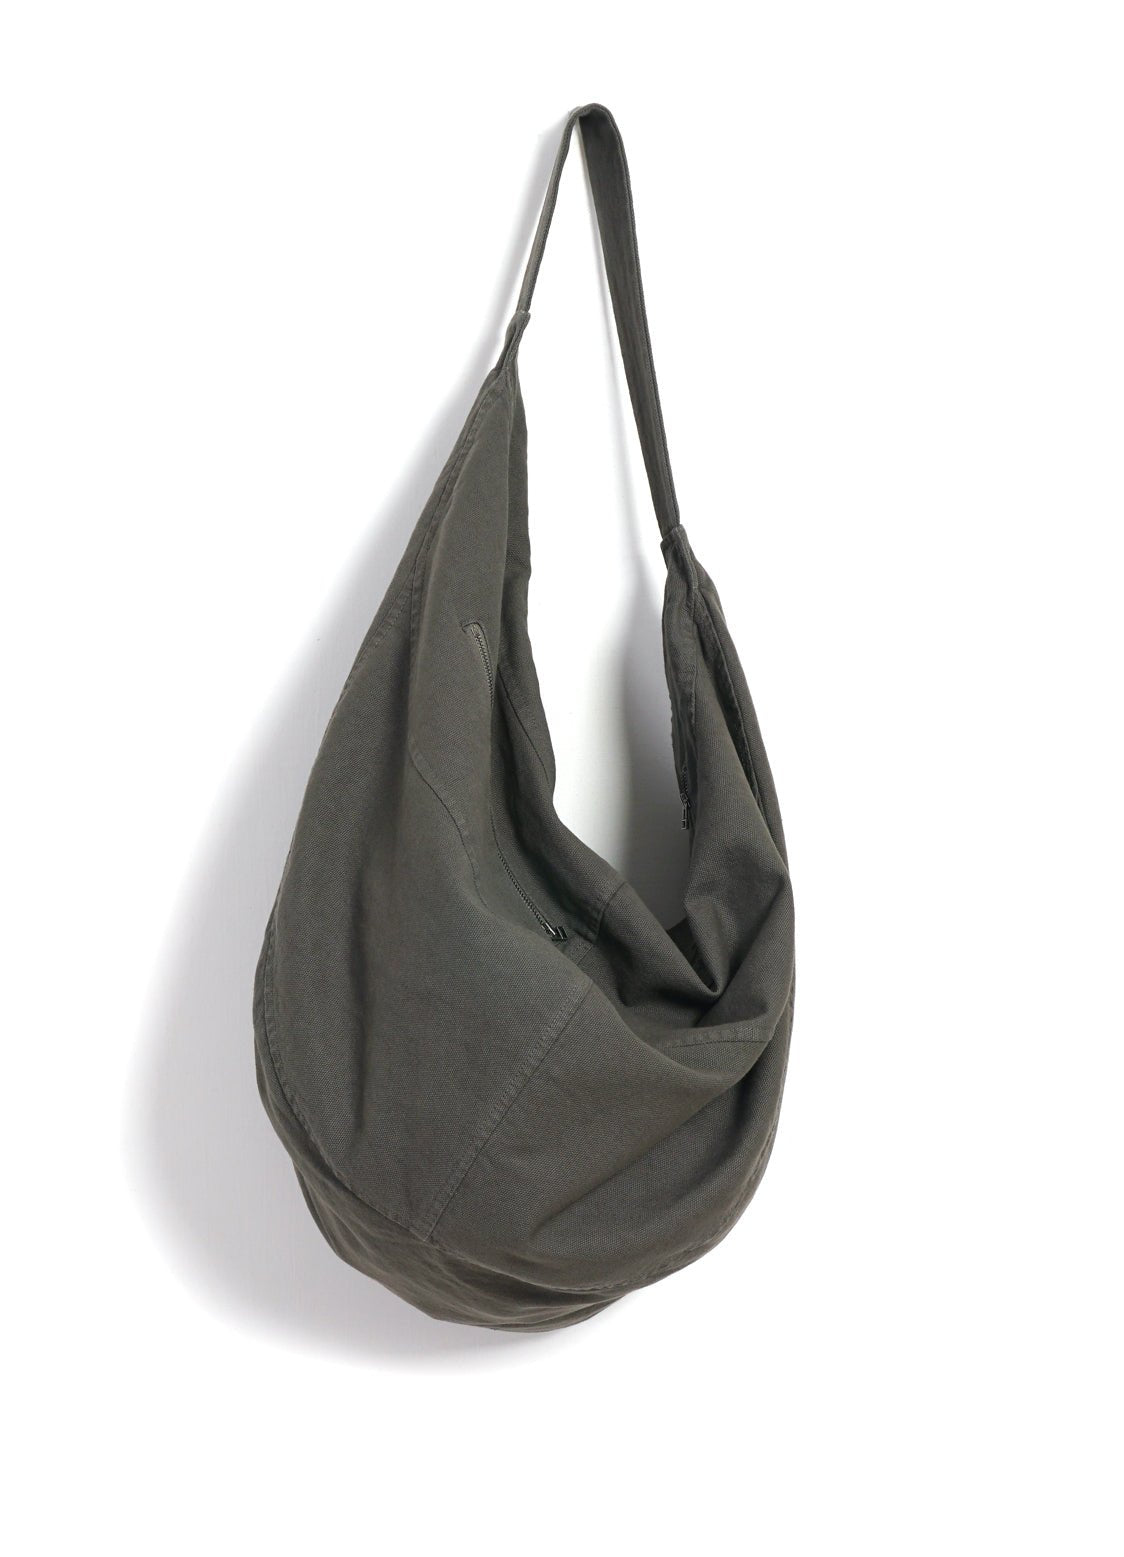 HANSEN GARMENTS - BILLY | Courier Bag | Green Grey - HANSEN Garments